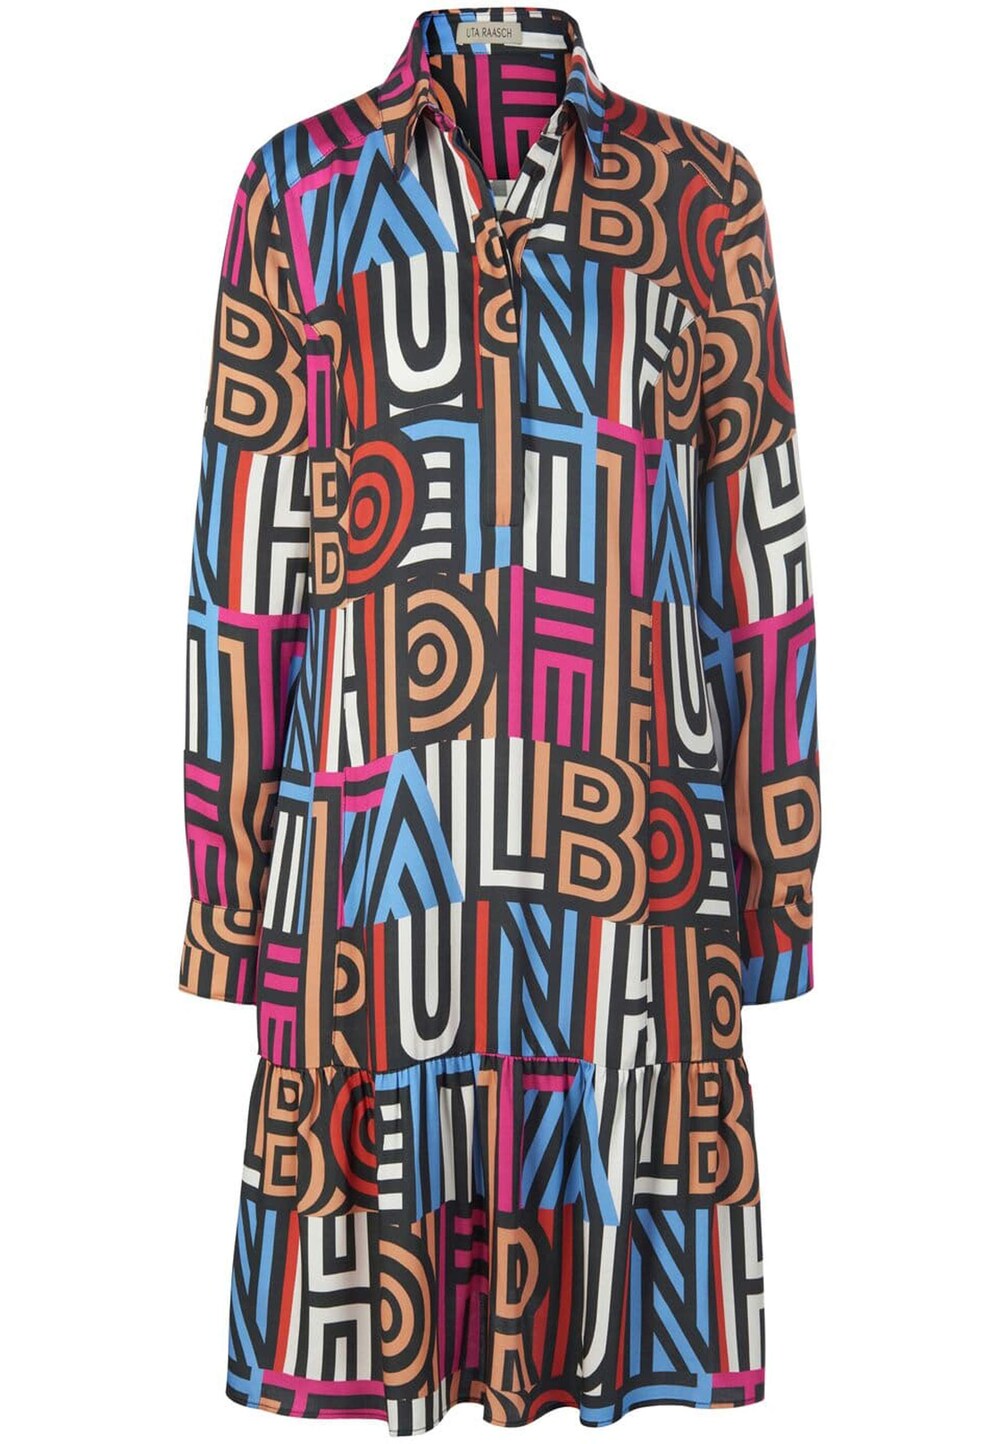 Рубашка-платье Talbot Runhof, смешанные цвета